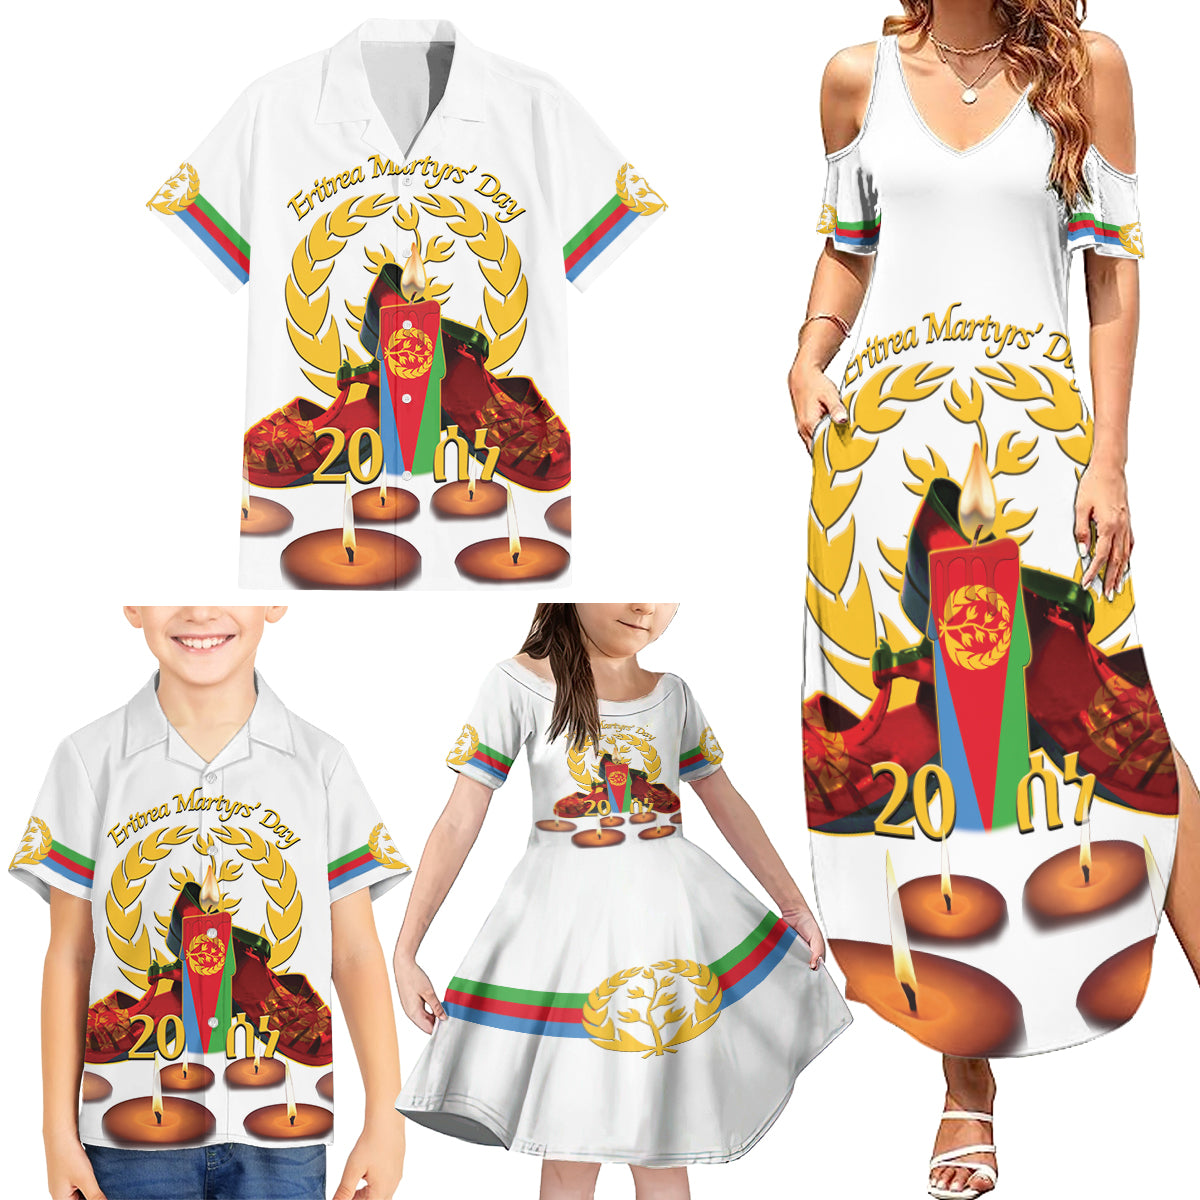 Custom Eritrea Martyrs' Day Family Matching Summer Maxi Dress and Hawaiian Shirt 20 June Shida Shoes With Candles - White